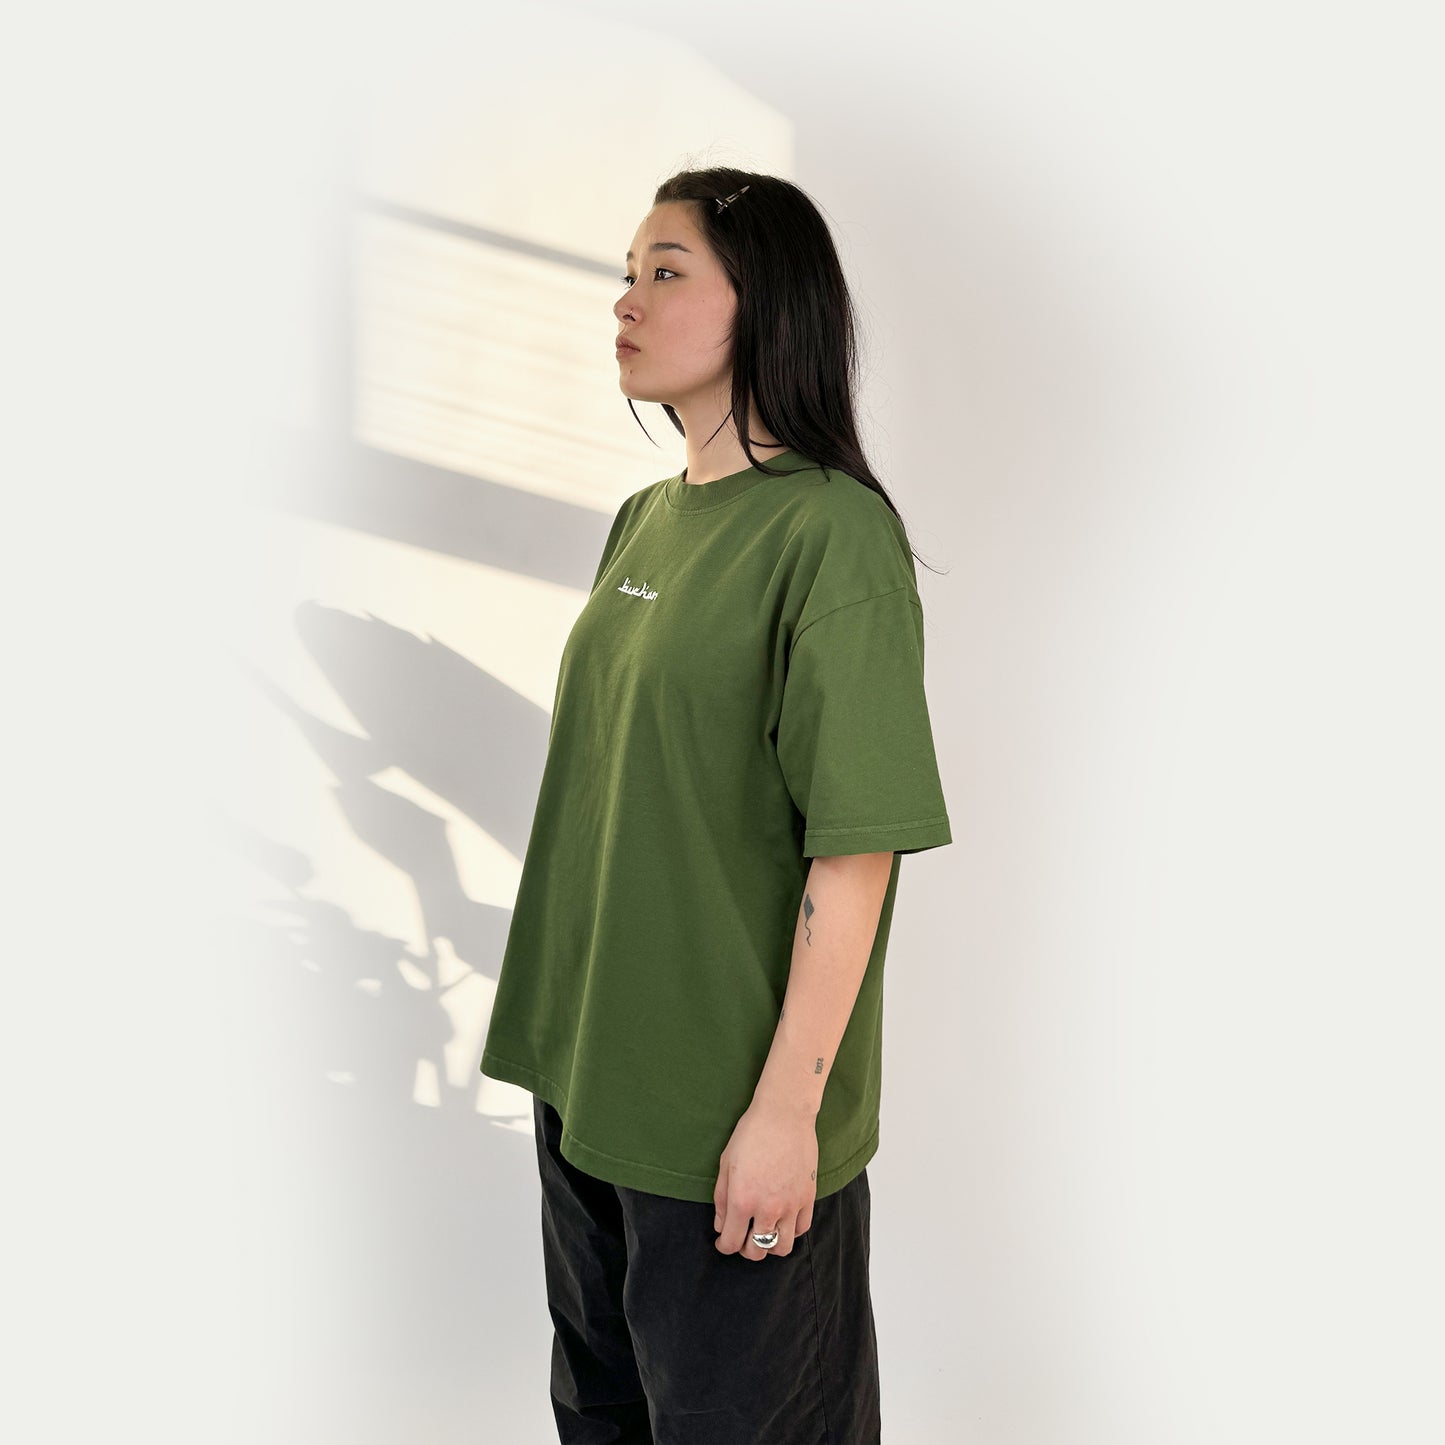 The Buchan T-shirt - Green